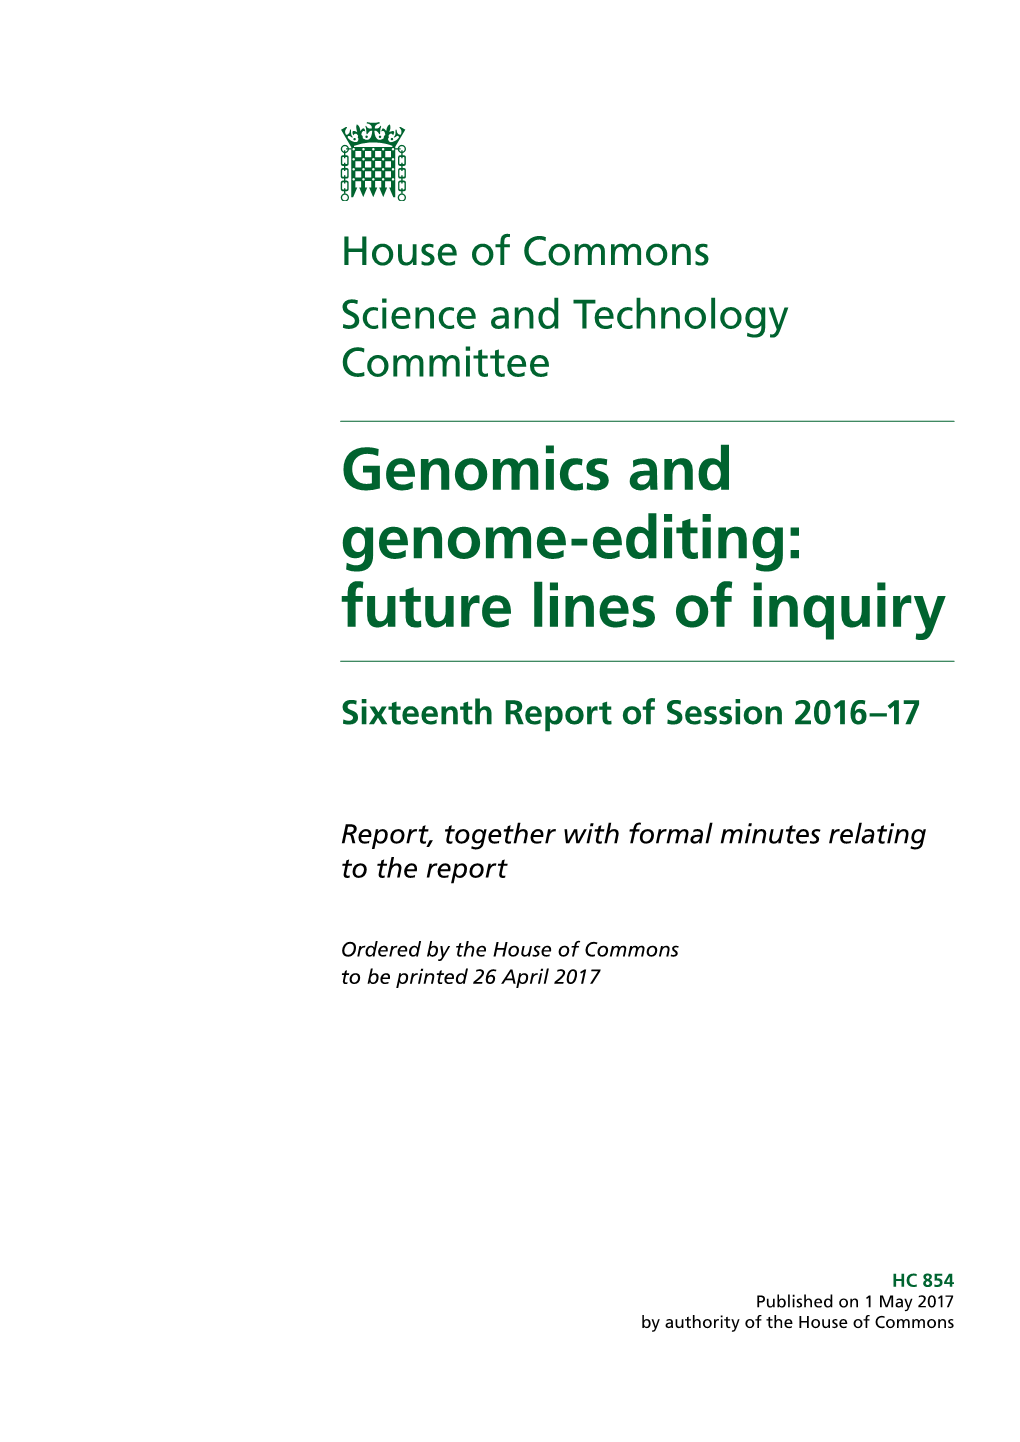 Genomics and Genome-Editing: Future Lines of Inquiry